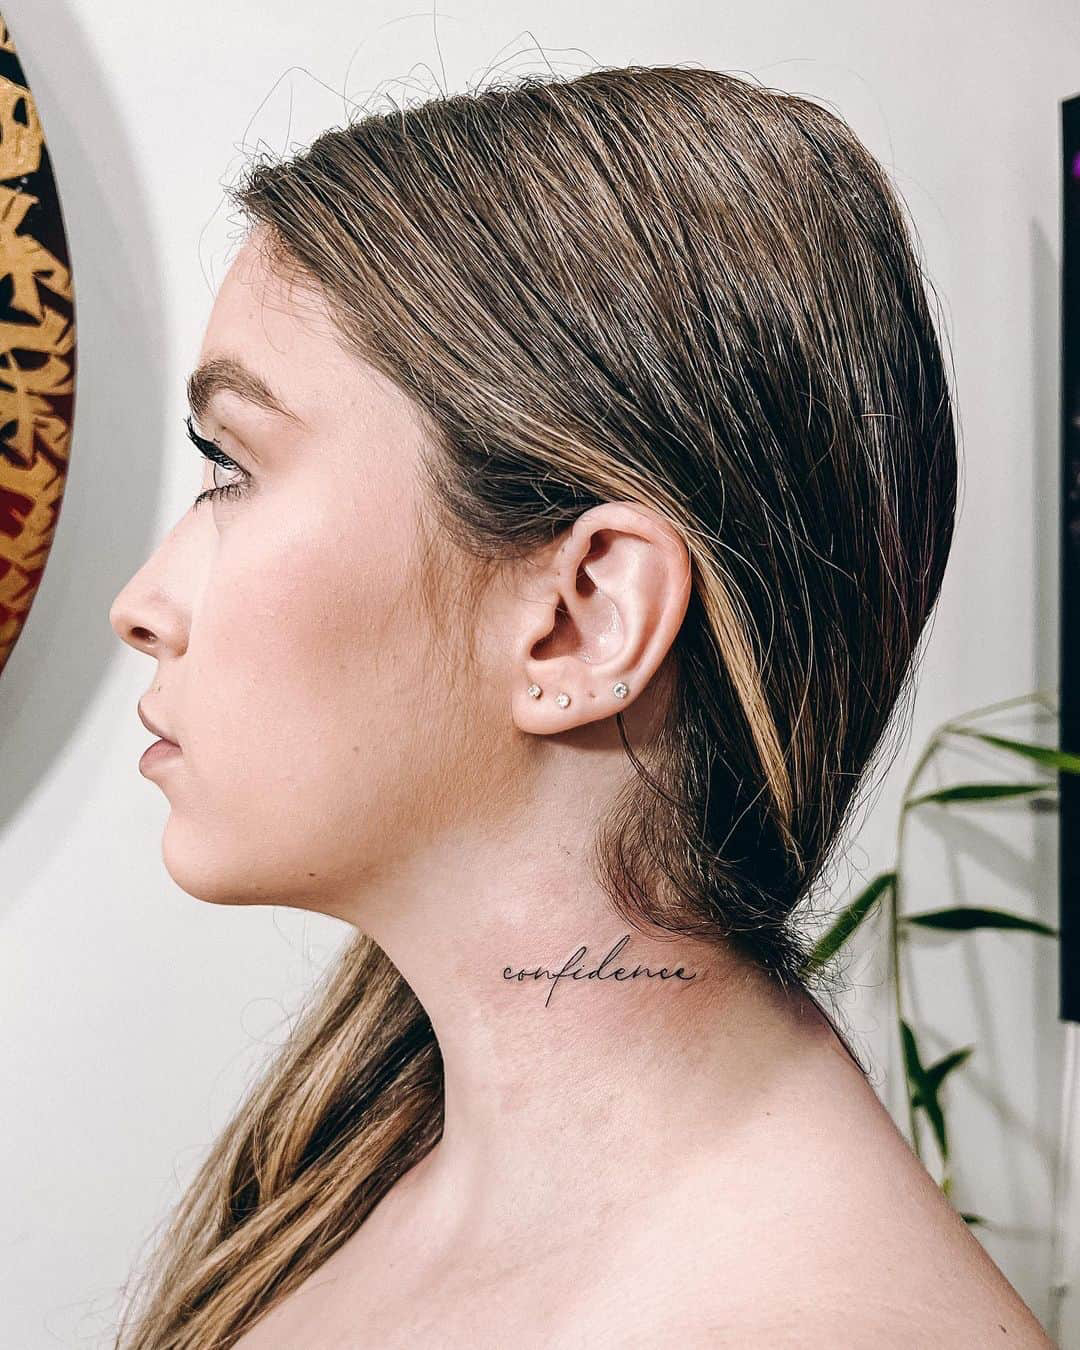 cool neck tattoos